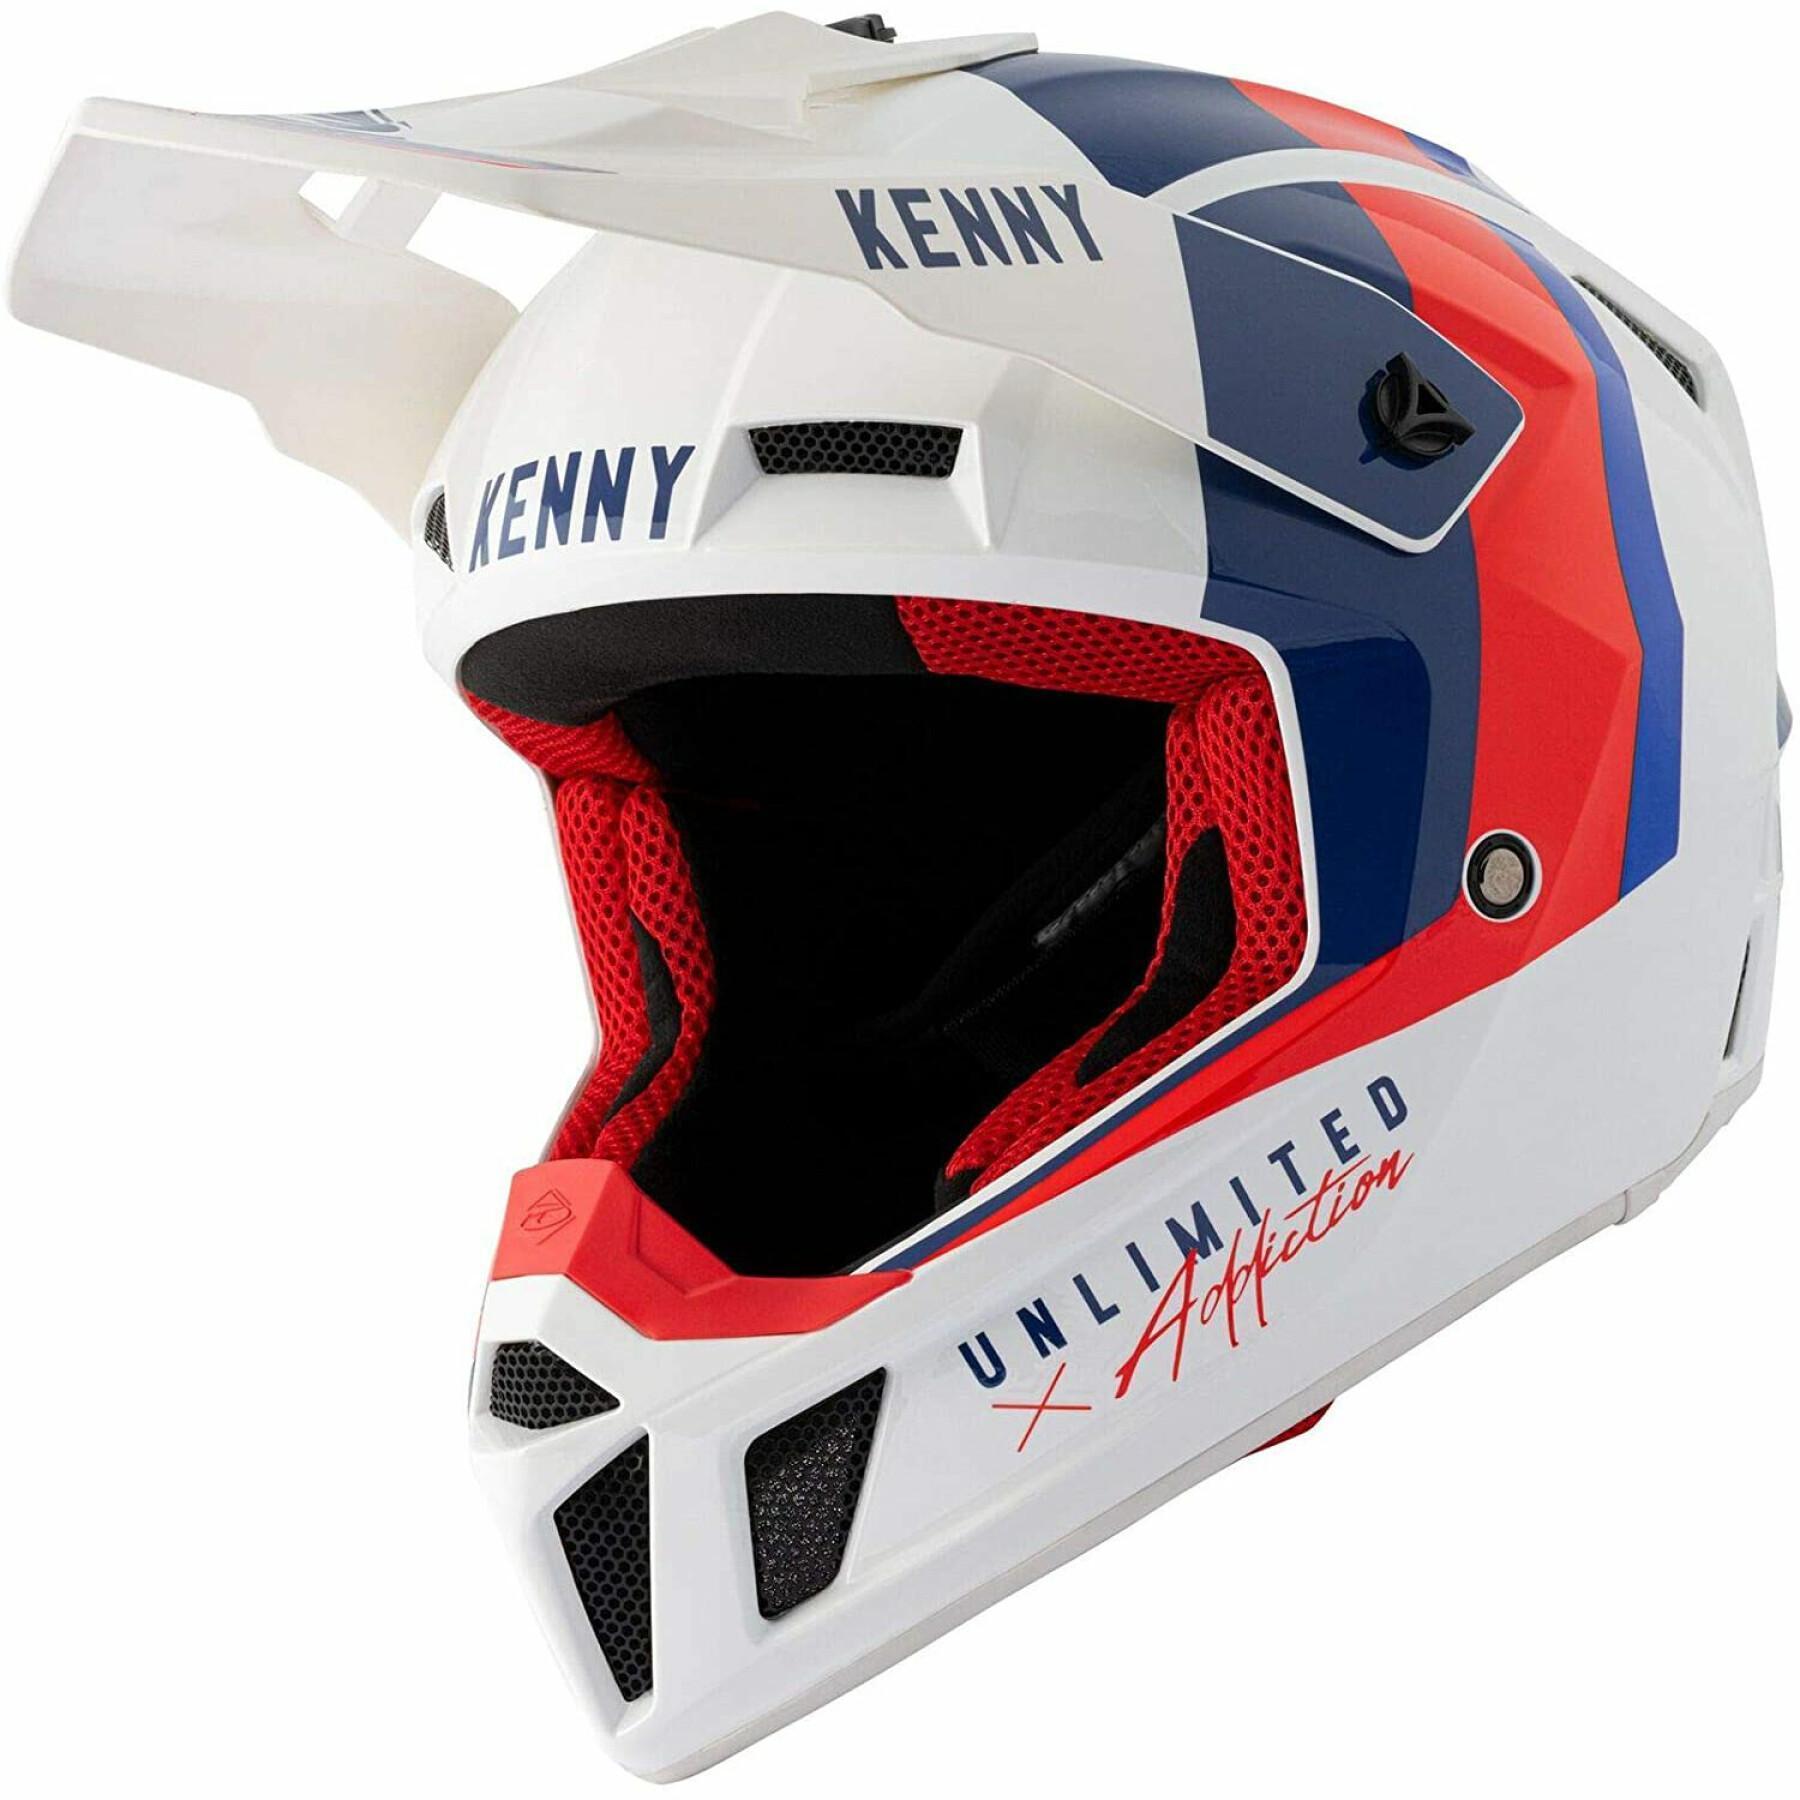 Motorcycle helmet Kenny performance graphic